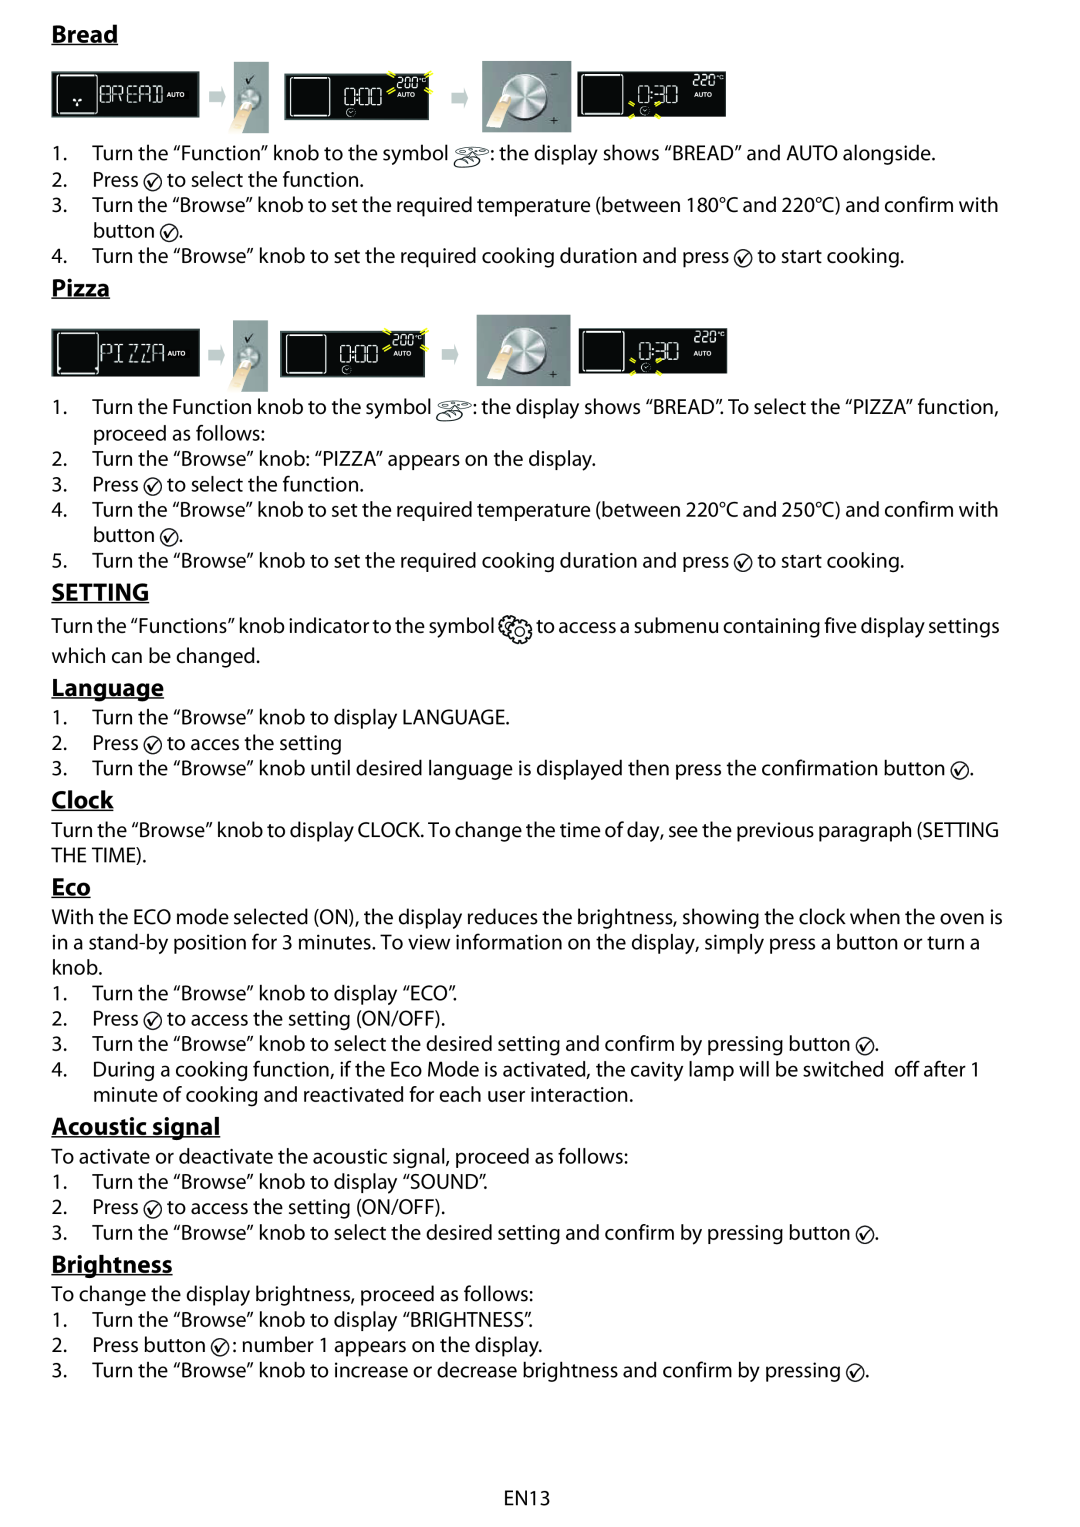 Whirlpool AKZM 775 manual do utilizador Bread, Pizza, Setting, Language, Clock, Acoustic signal, Brightness 